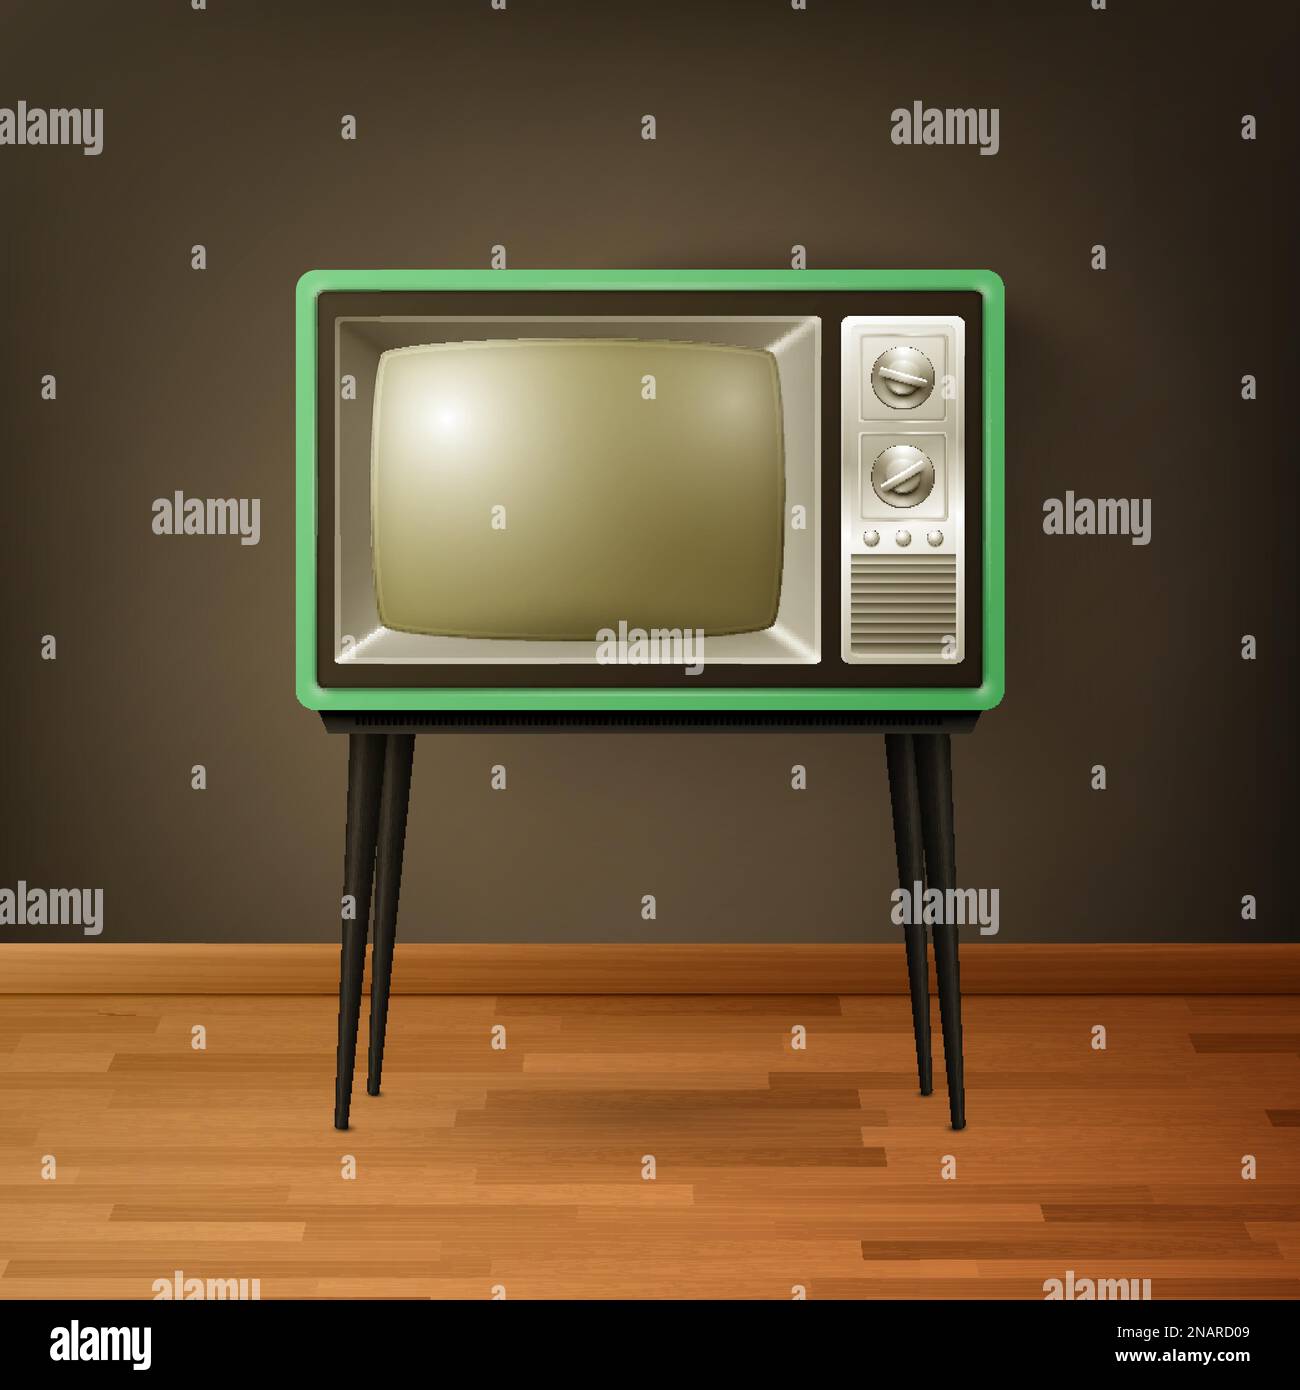 Vector 3d Realistic Retro TV Receiver on Wooden Floor. Home Interior Design Concept. Vintage TV Set, Television, Front View Stock Vector